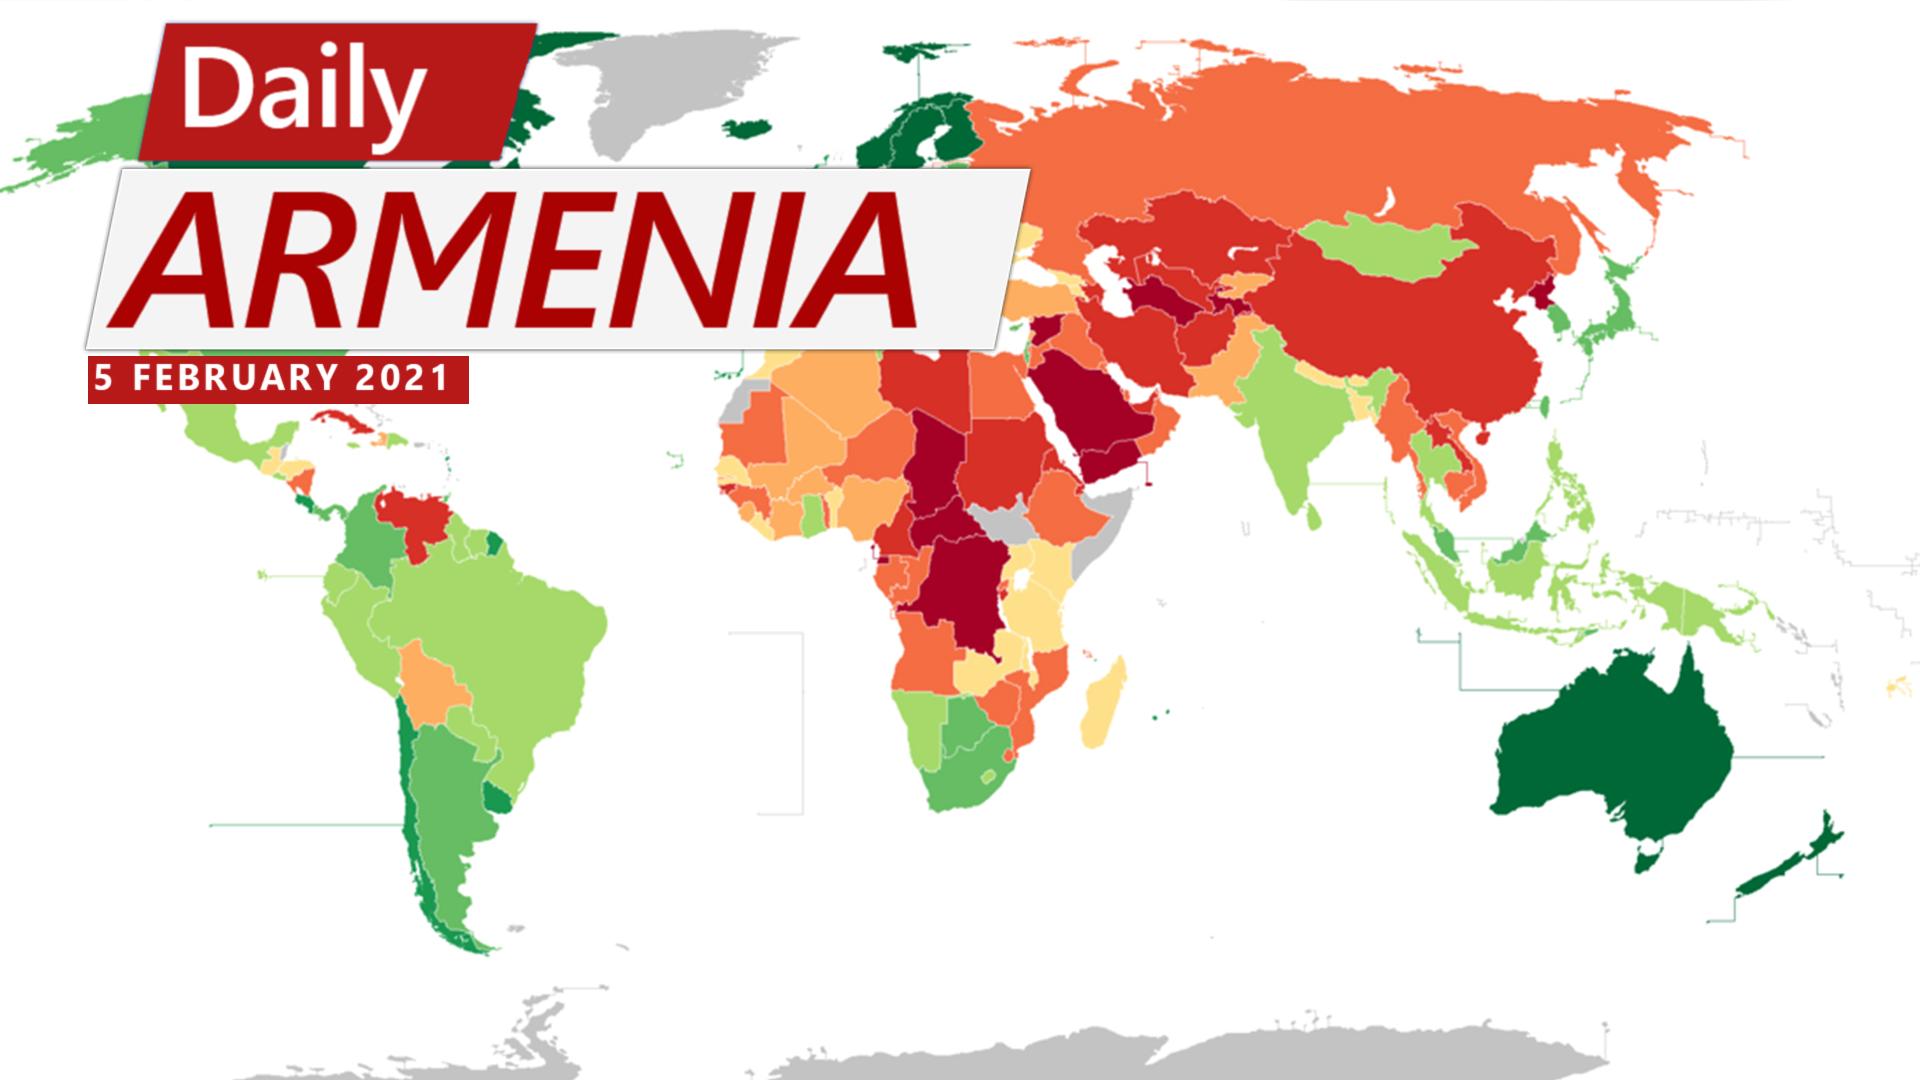 Armeniа’s Drops 3 Places in 2020 Democracy Index